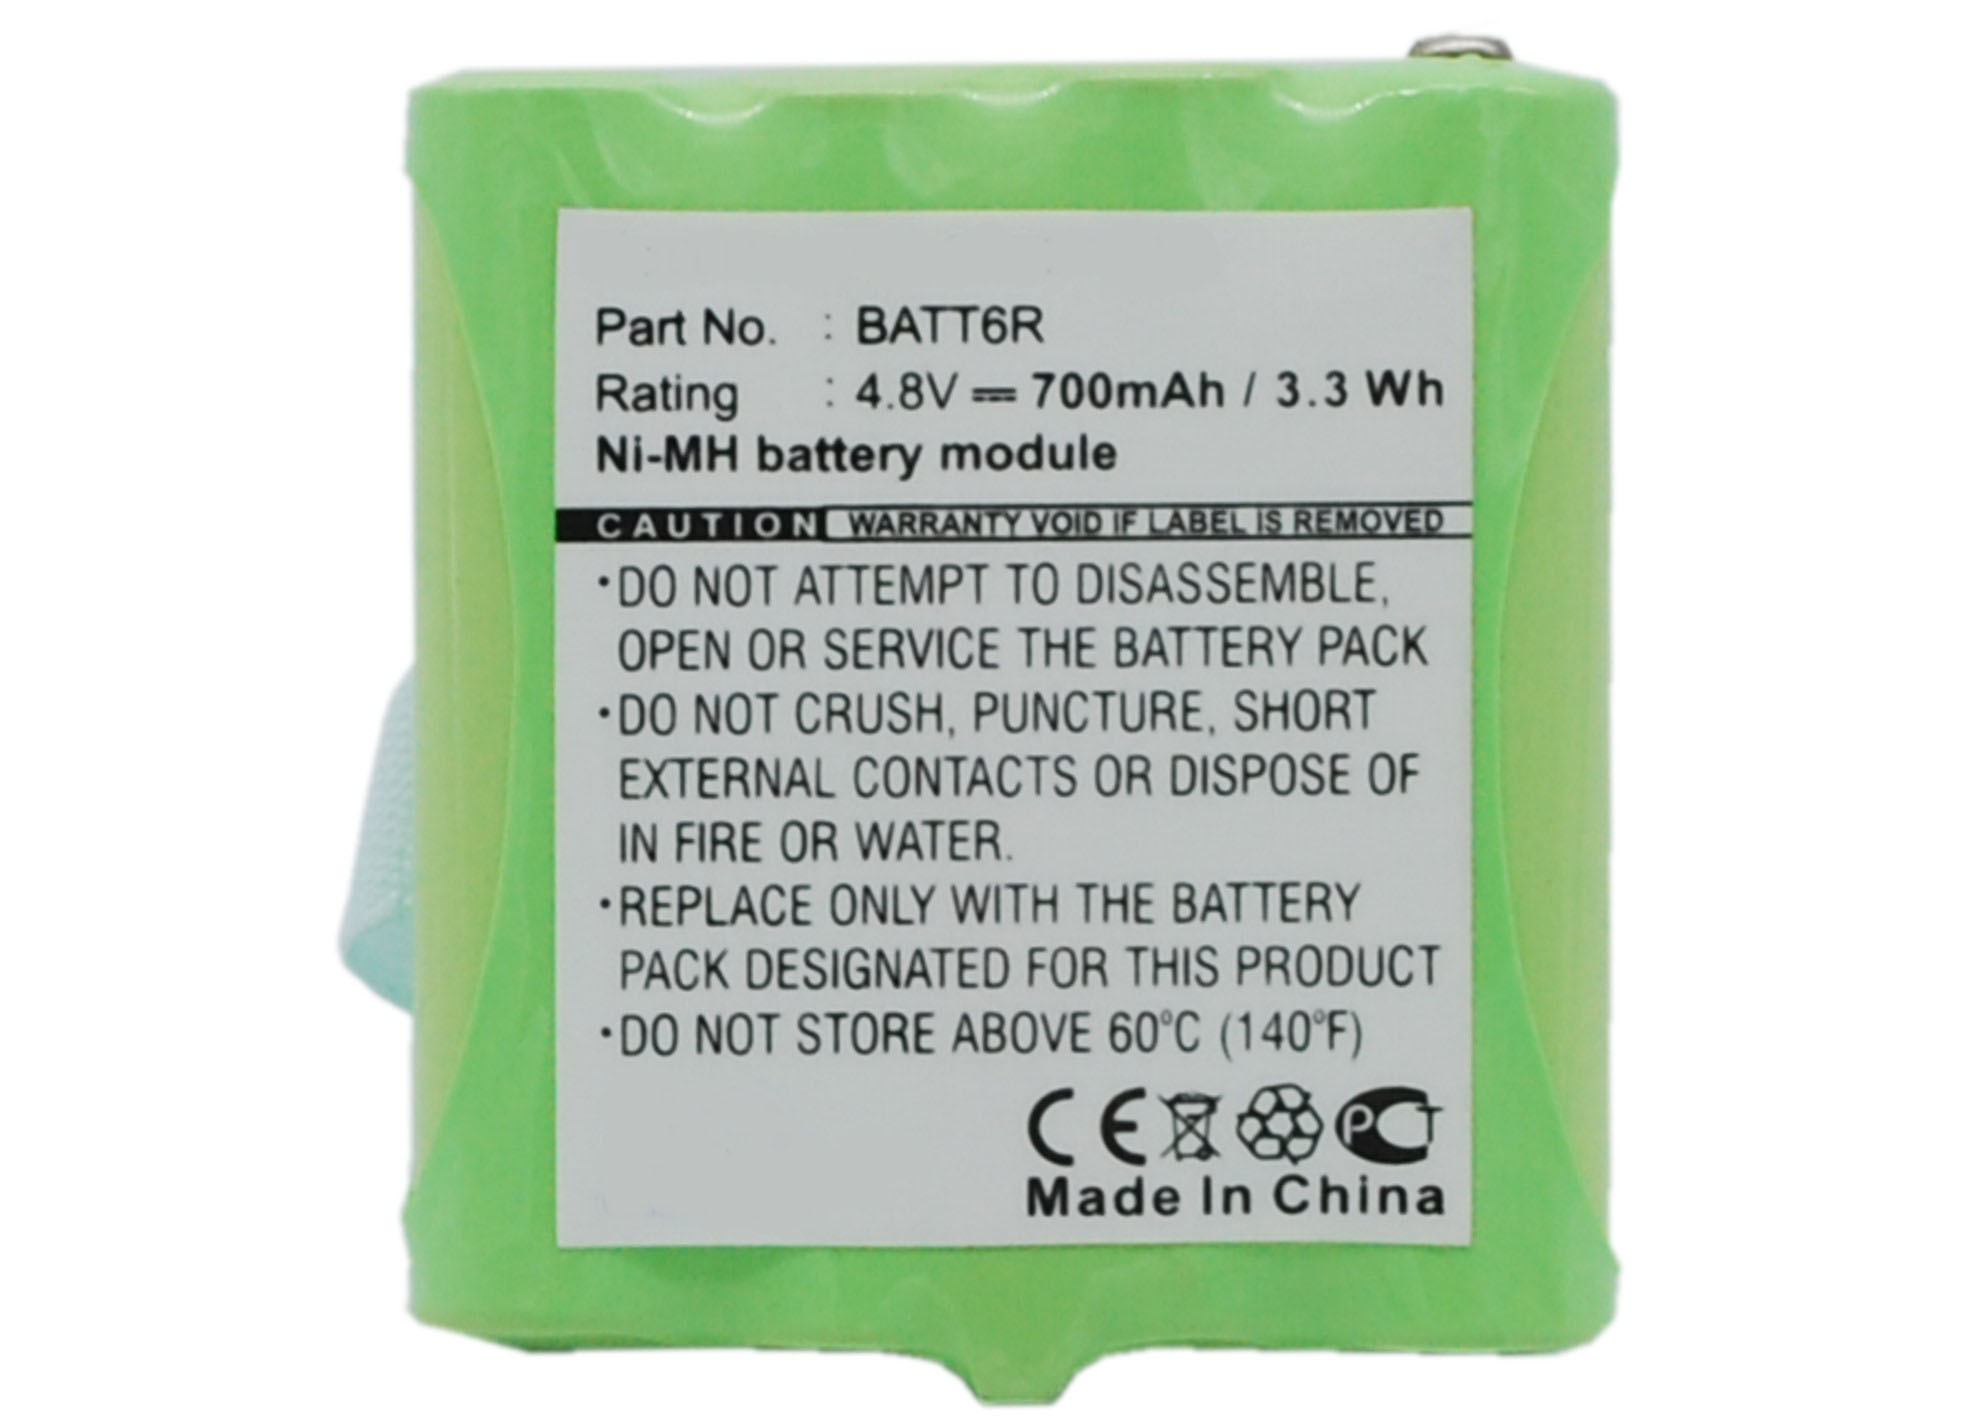 Batteries for Midland2-Way Radio